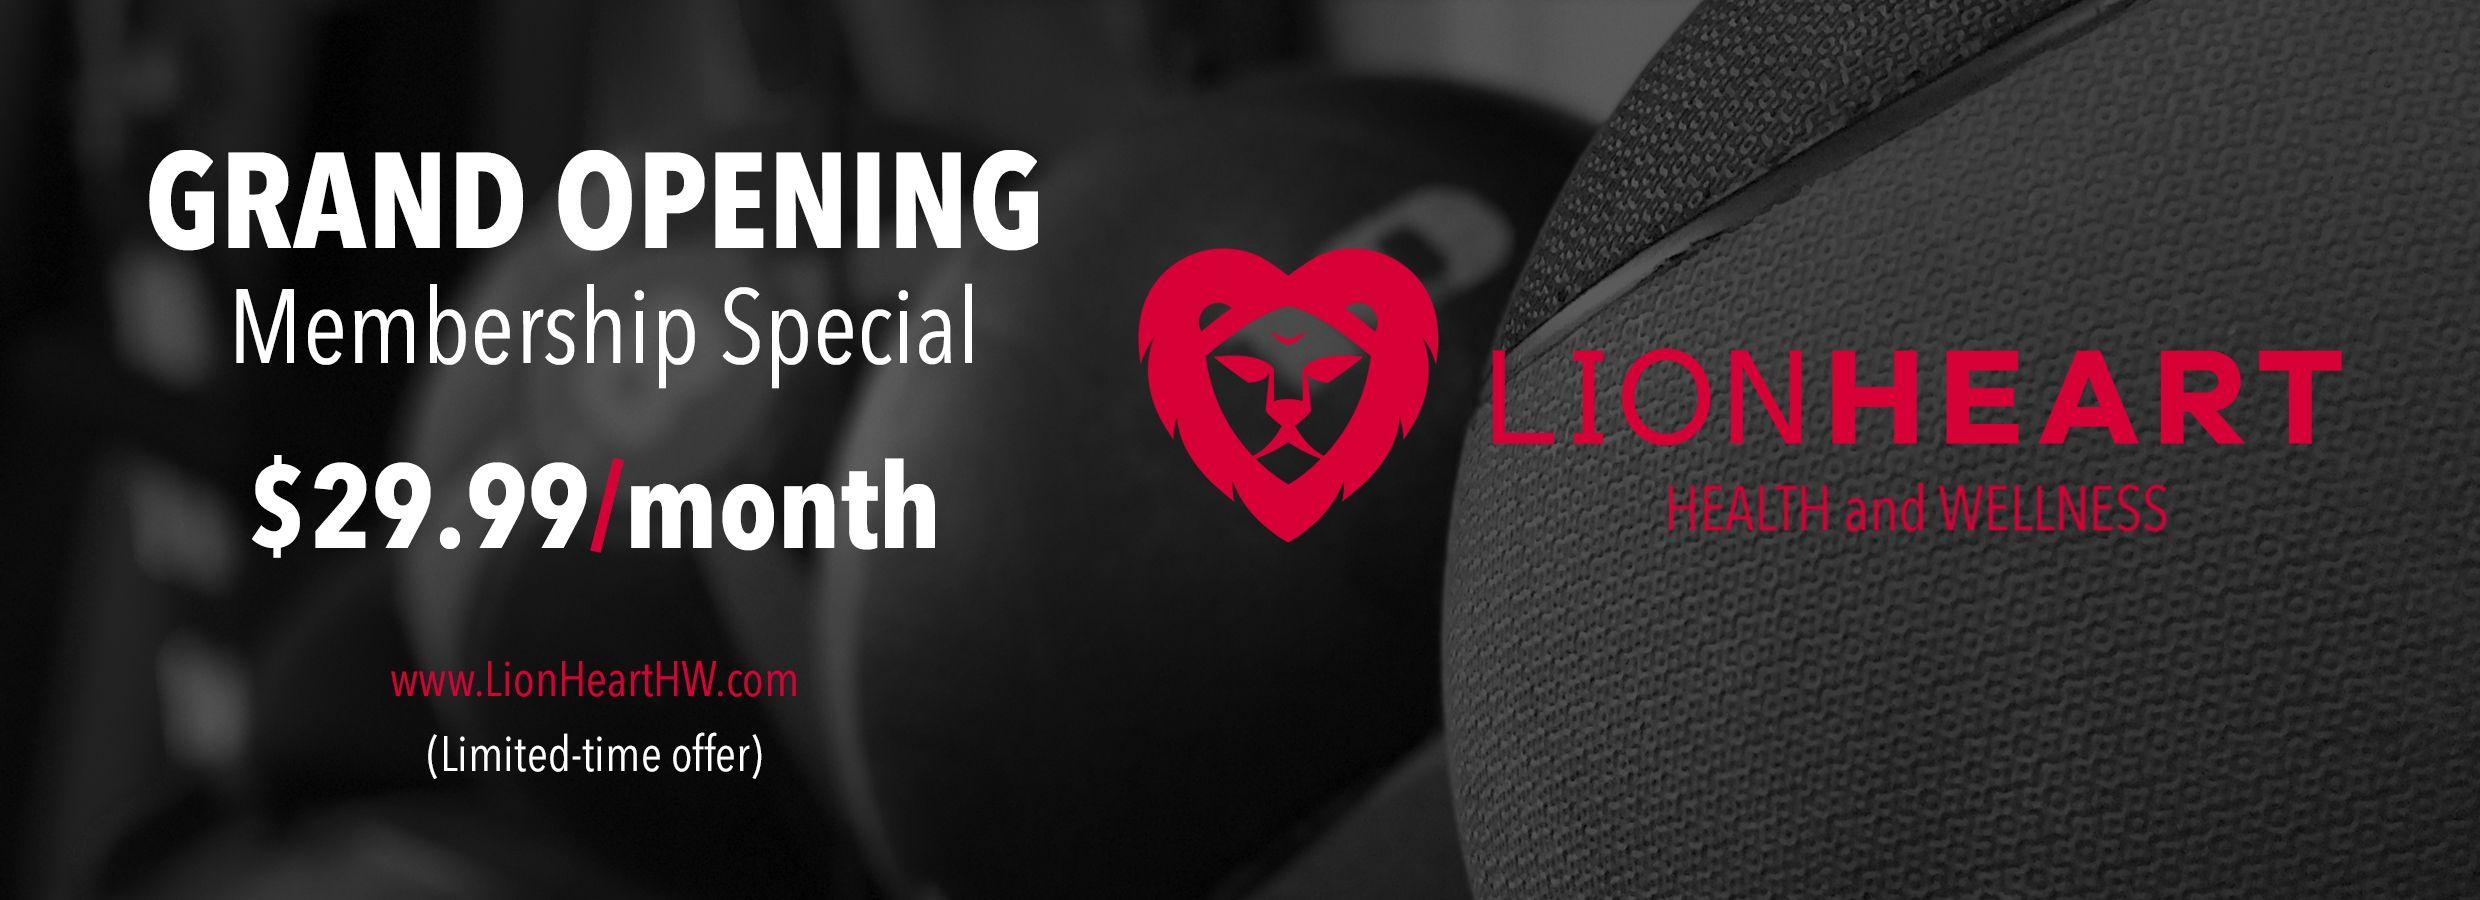 Heart Health and Wellness Logo - Lion Heart Health and Fitness